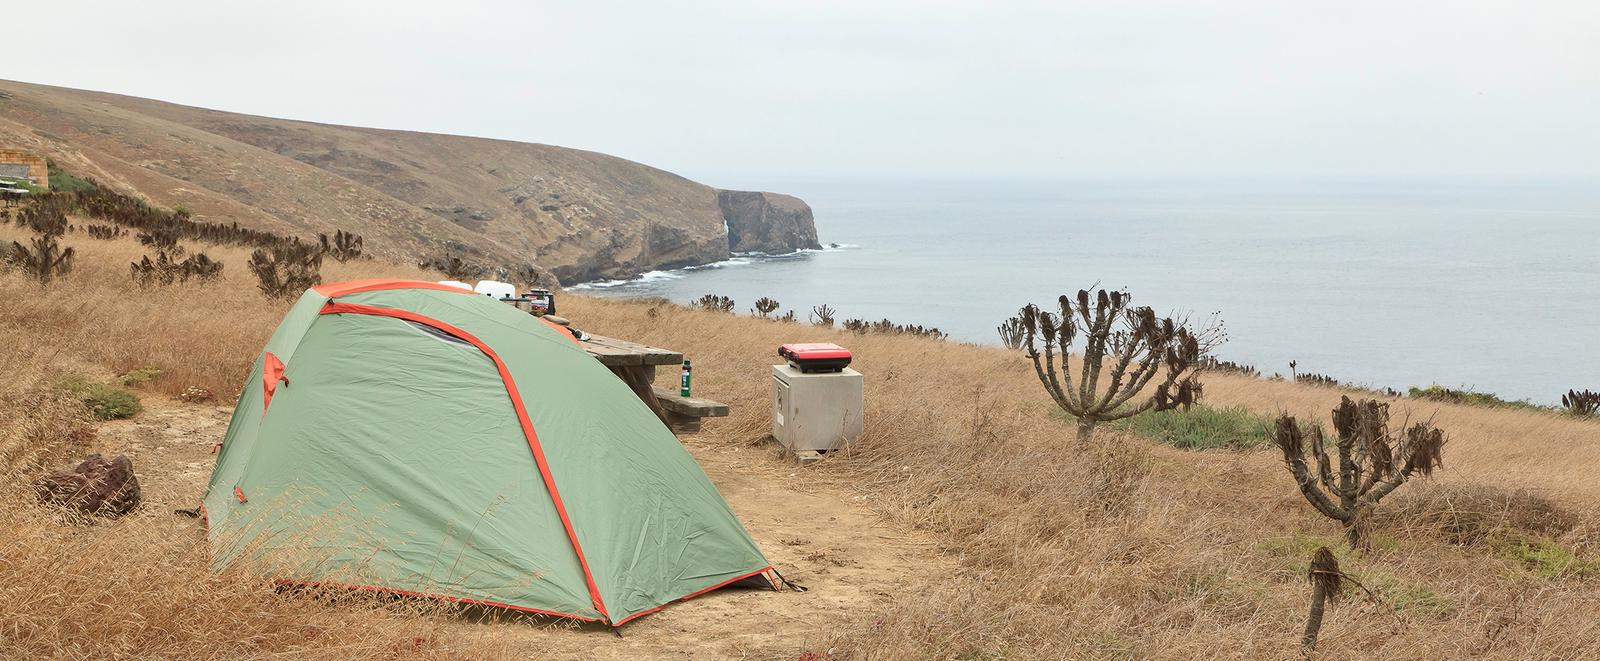 Tent sitting in dried grass on a ocean bluff overlooking the coastline.SANTA BARBARA ISLAND